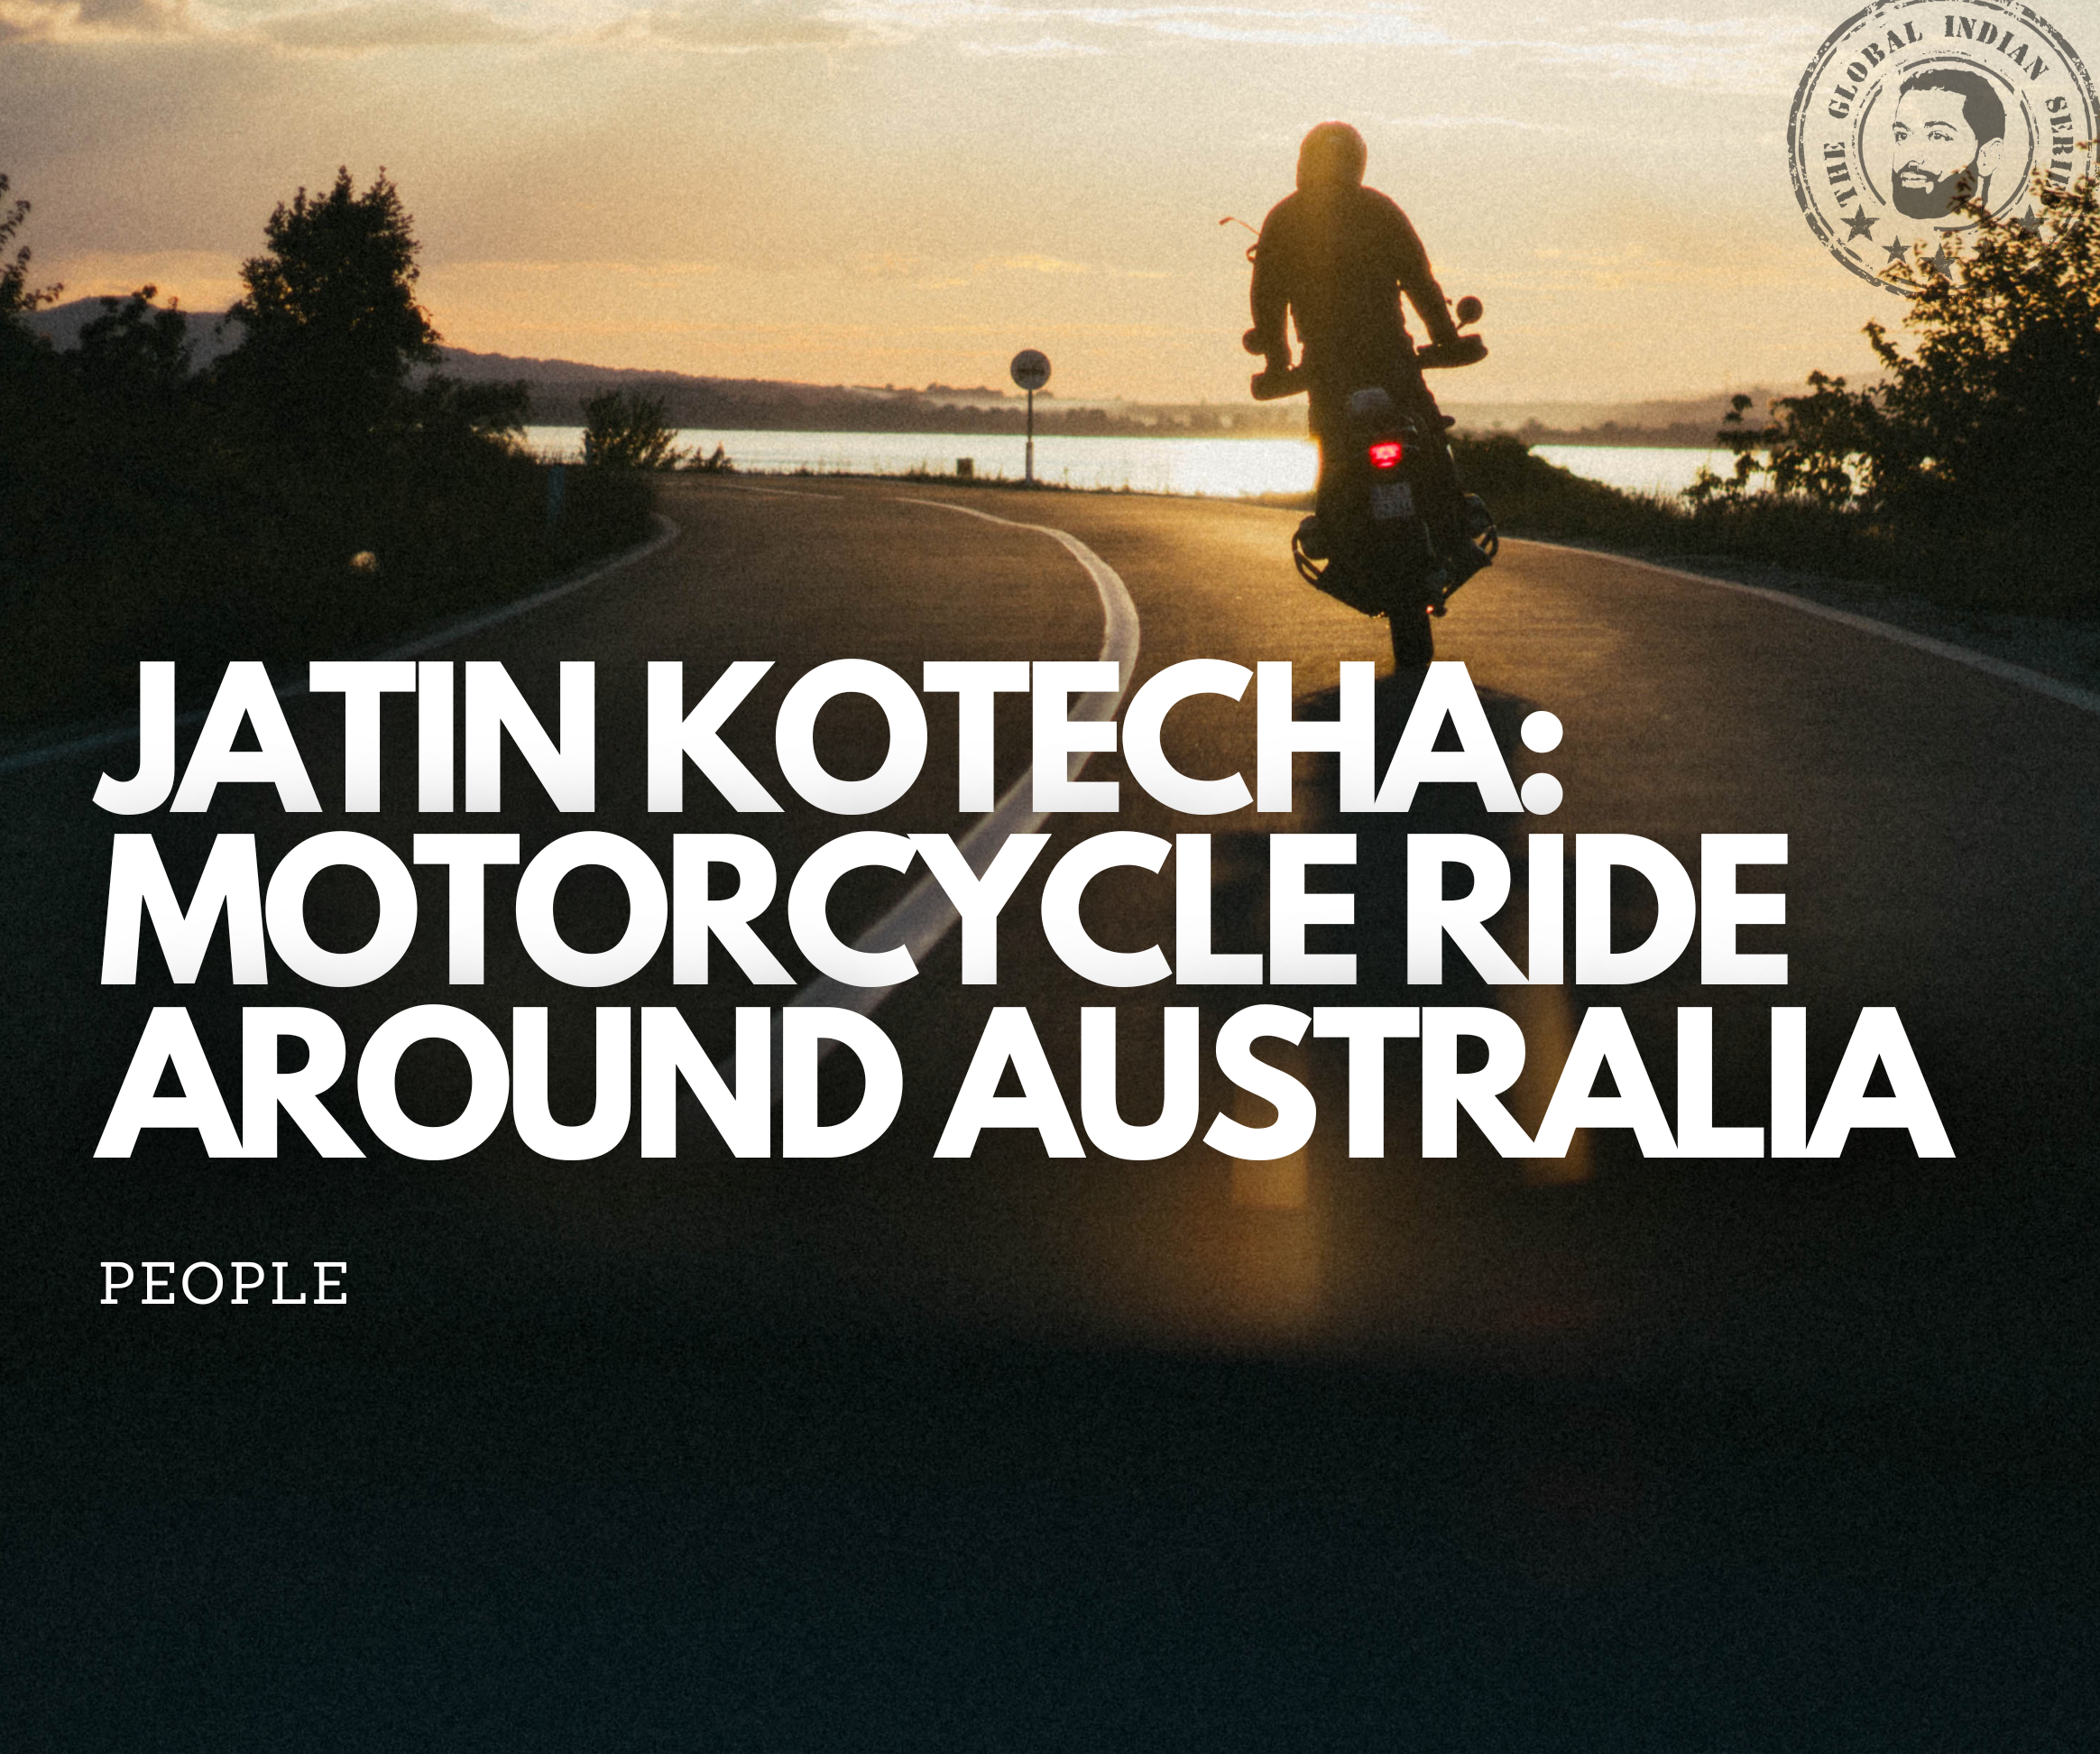 Jatin kotecha motorcycle ride around australia